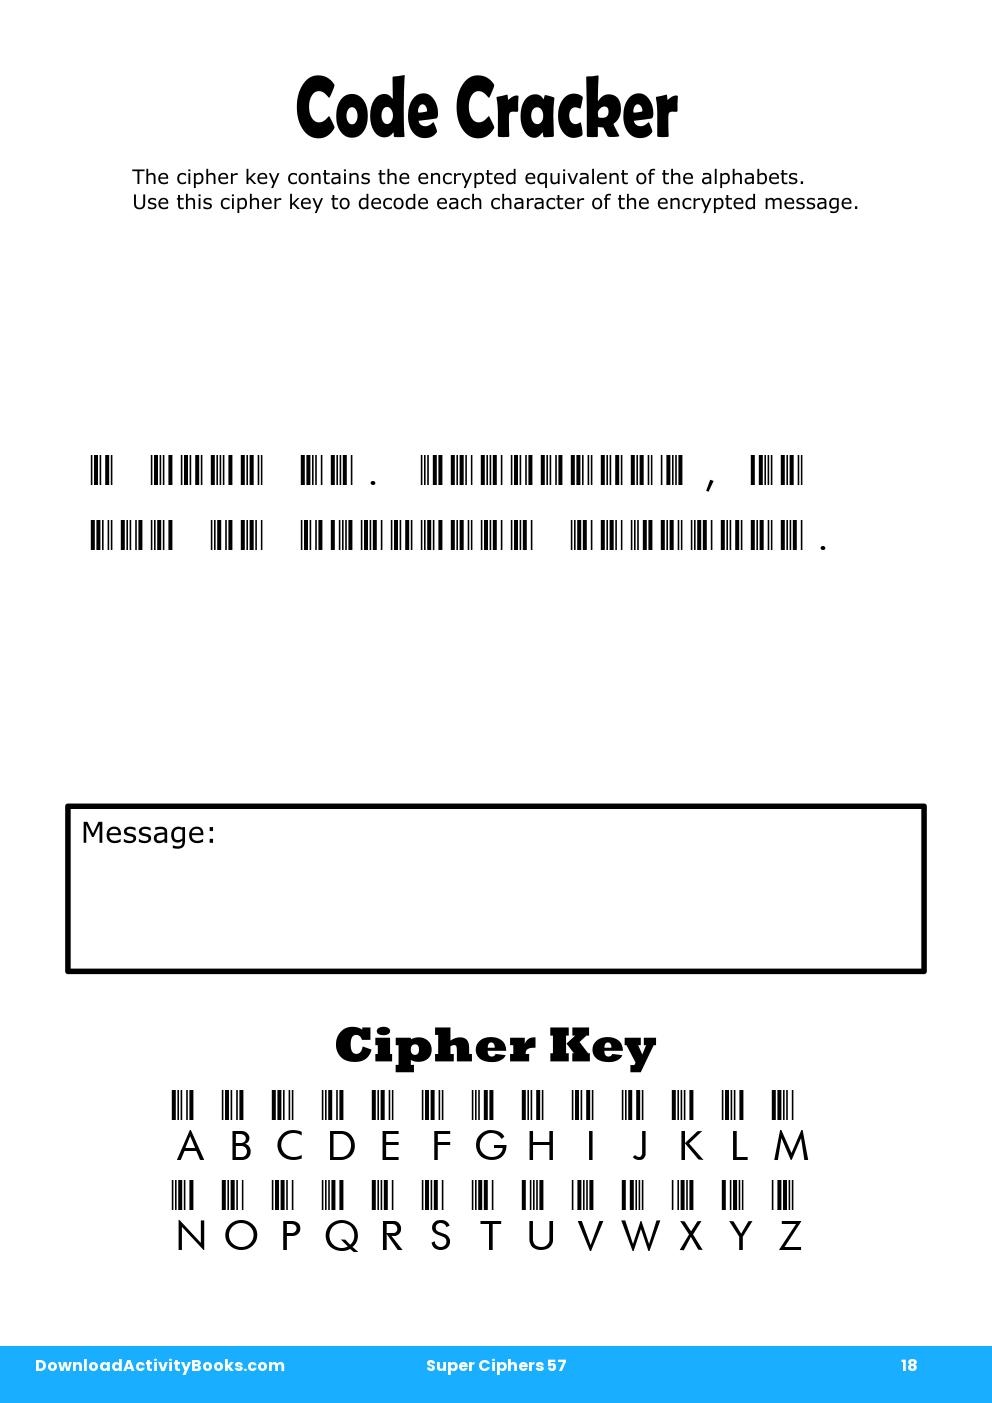 Code Cracker in Super Ciphers 57